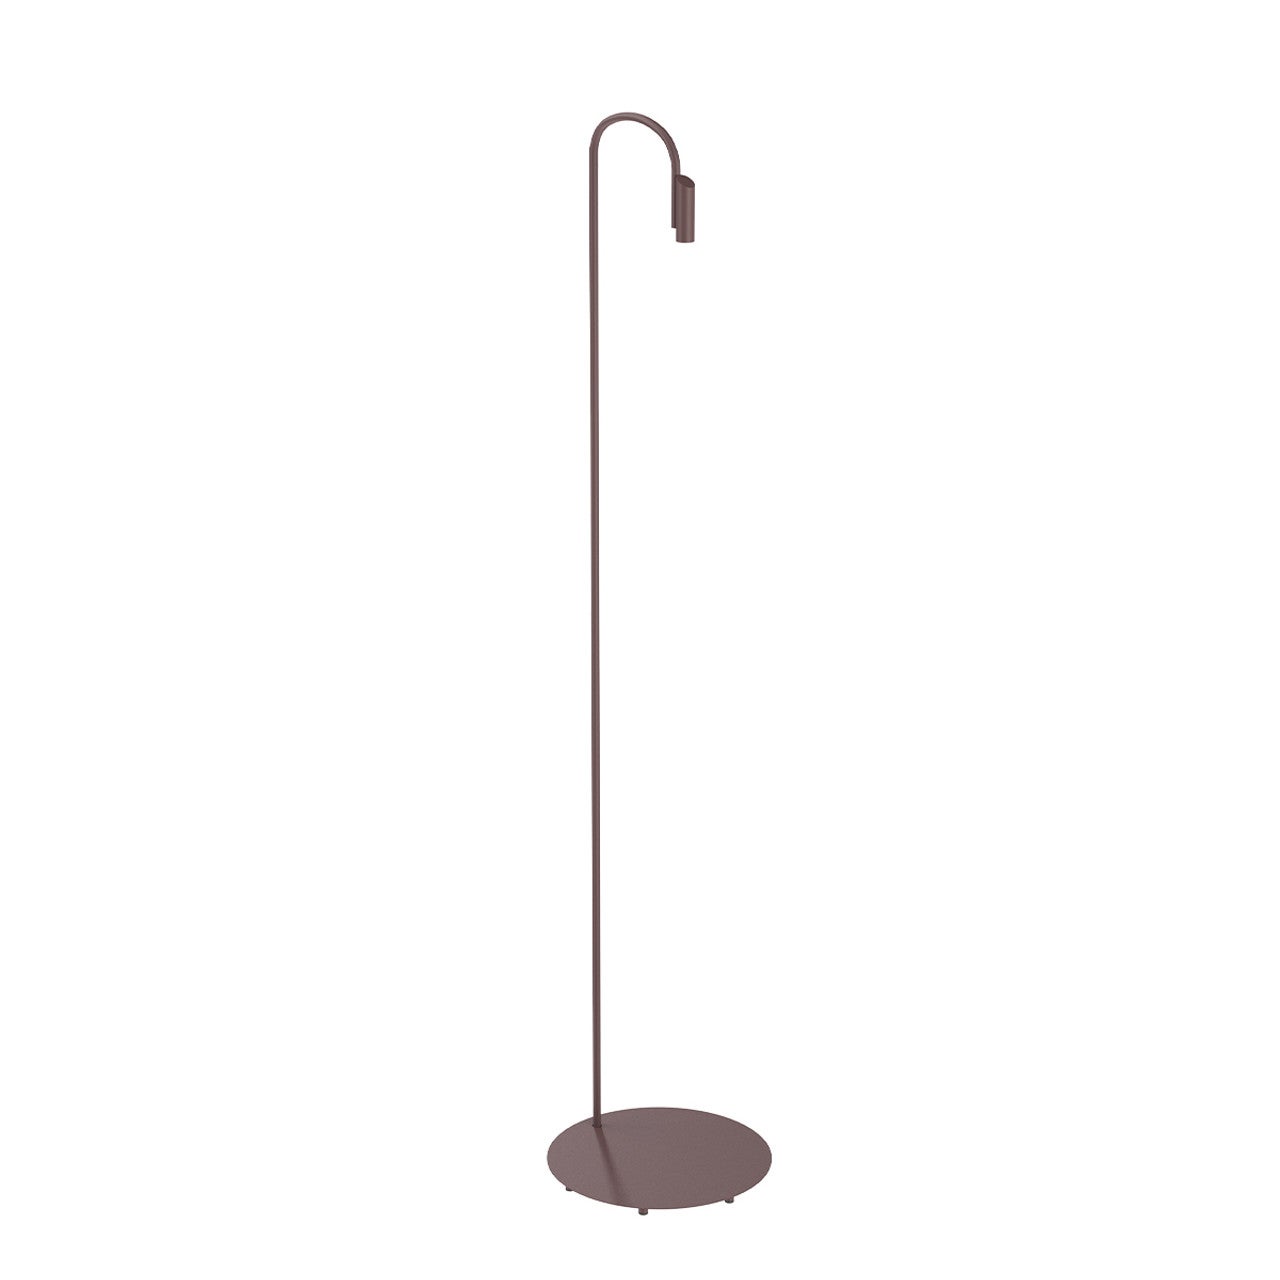 Flos Caule 3000K Model 5 Outdoor Floor Lamp in Deep Brown with Regular Shade